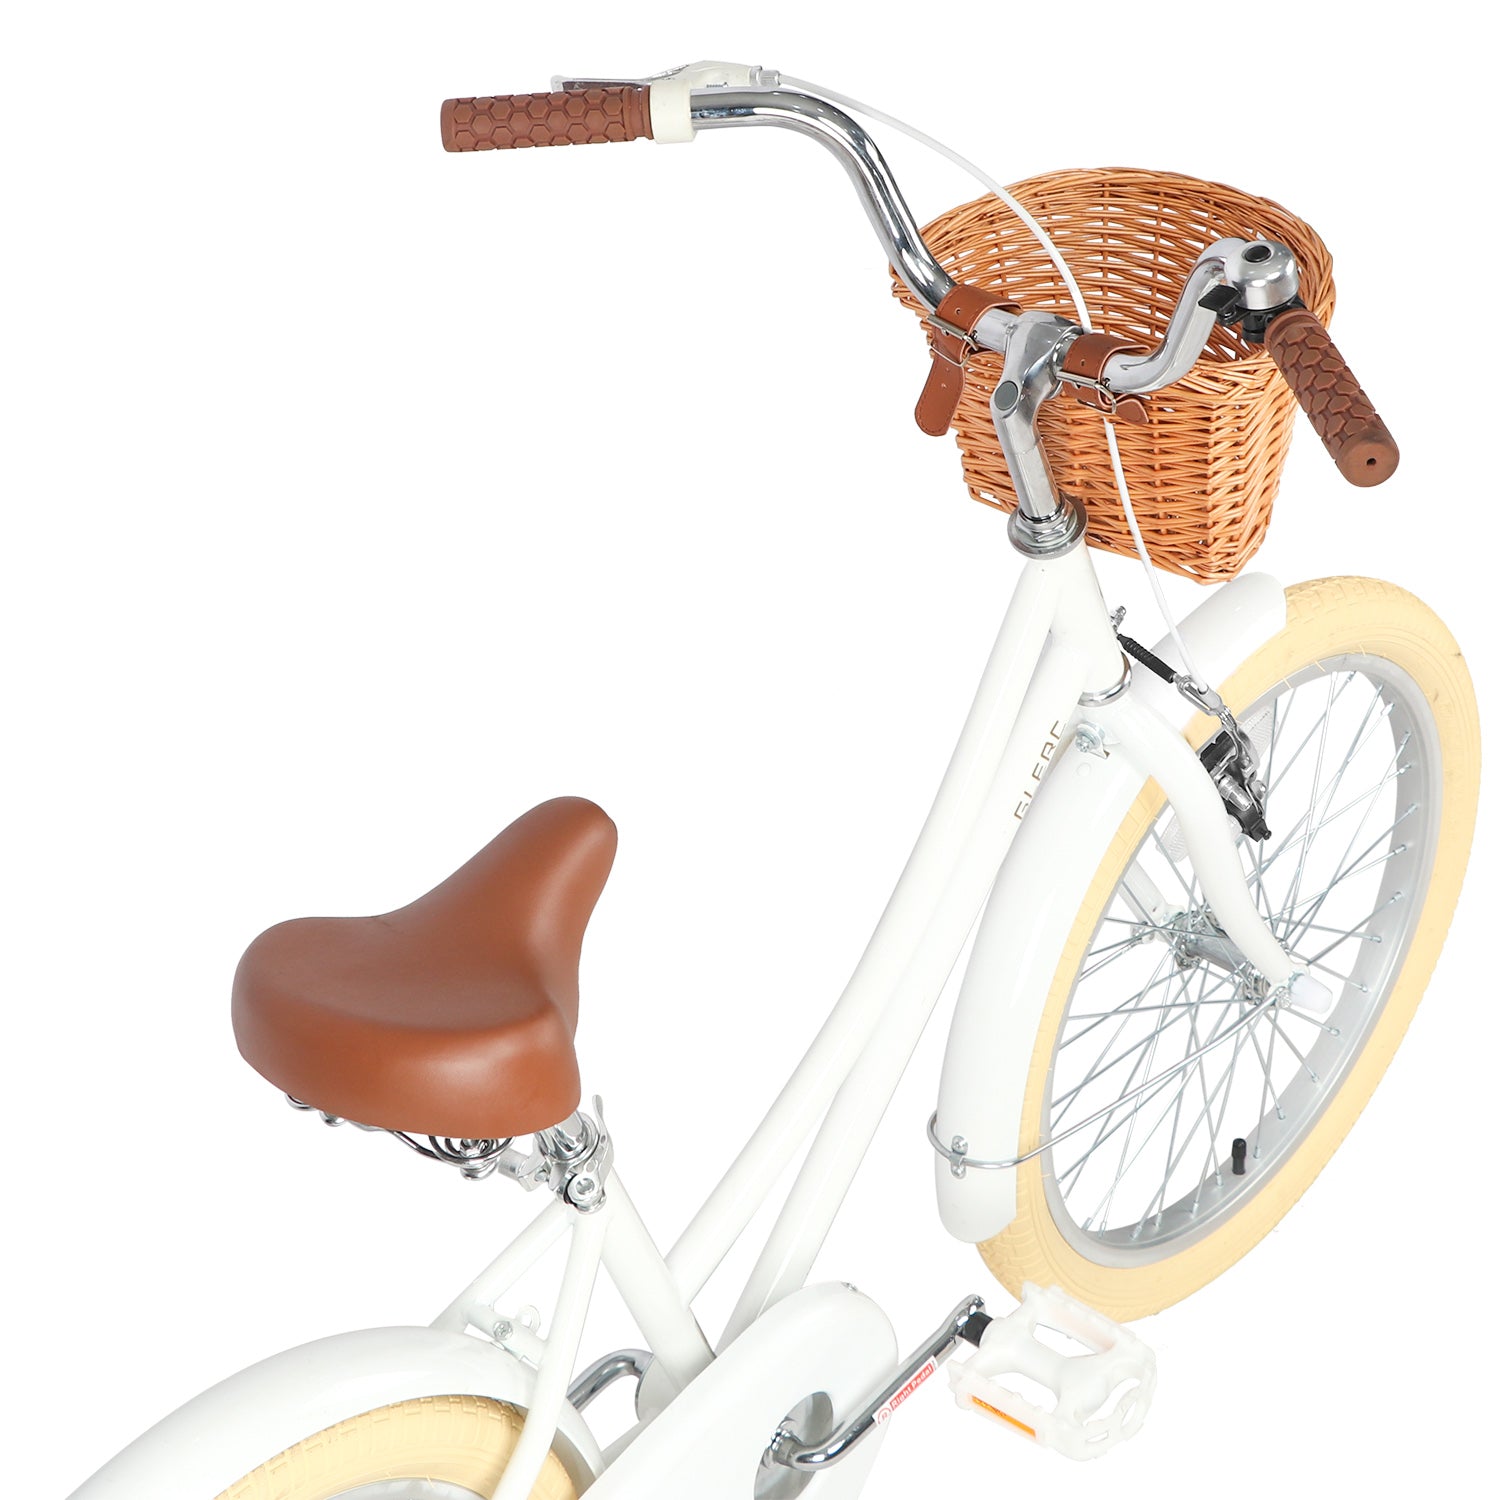 Glerc 20インチ子供用自転車 可愛い女の子用自転車 ジュニア自転車 カゴ付き